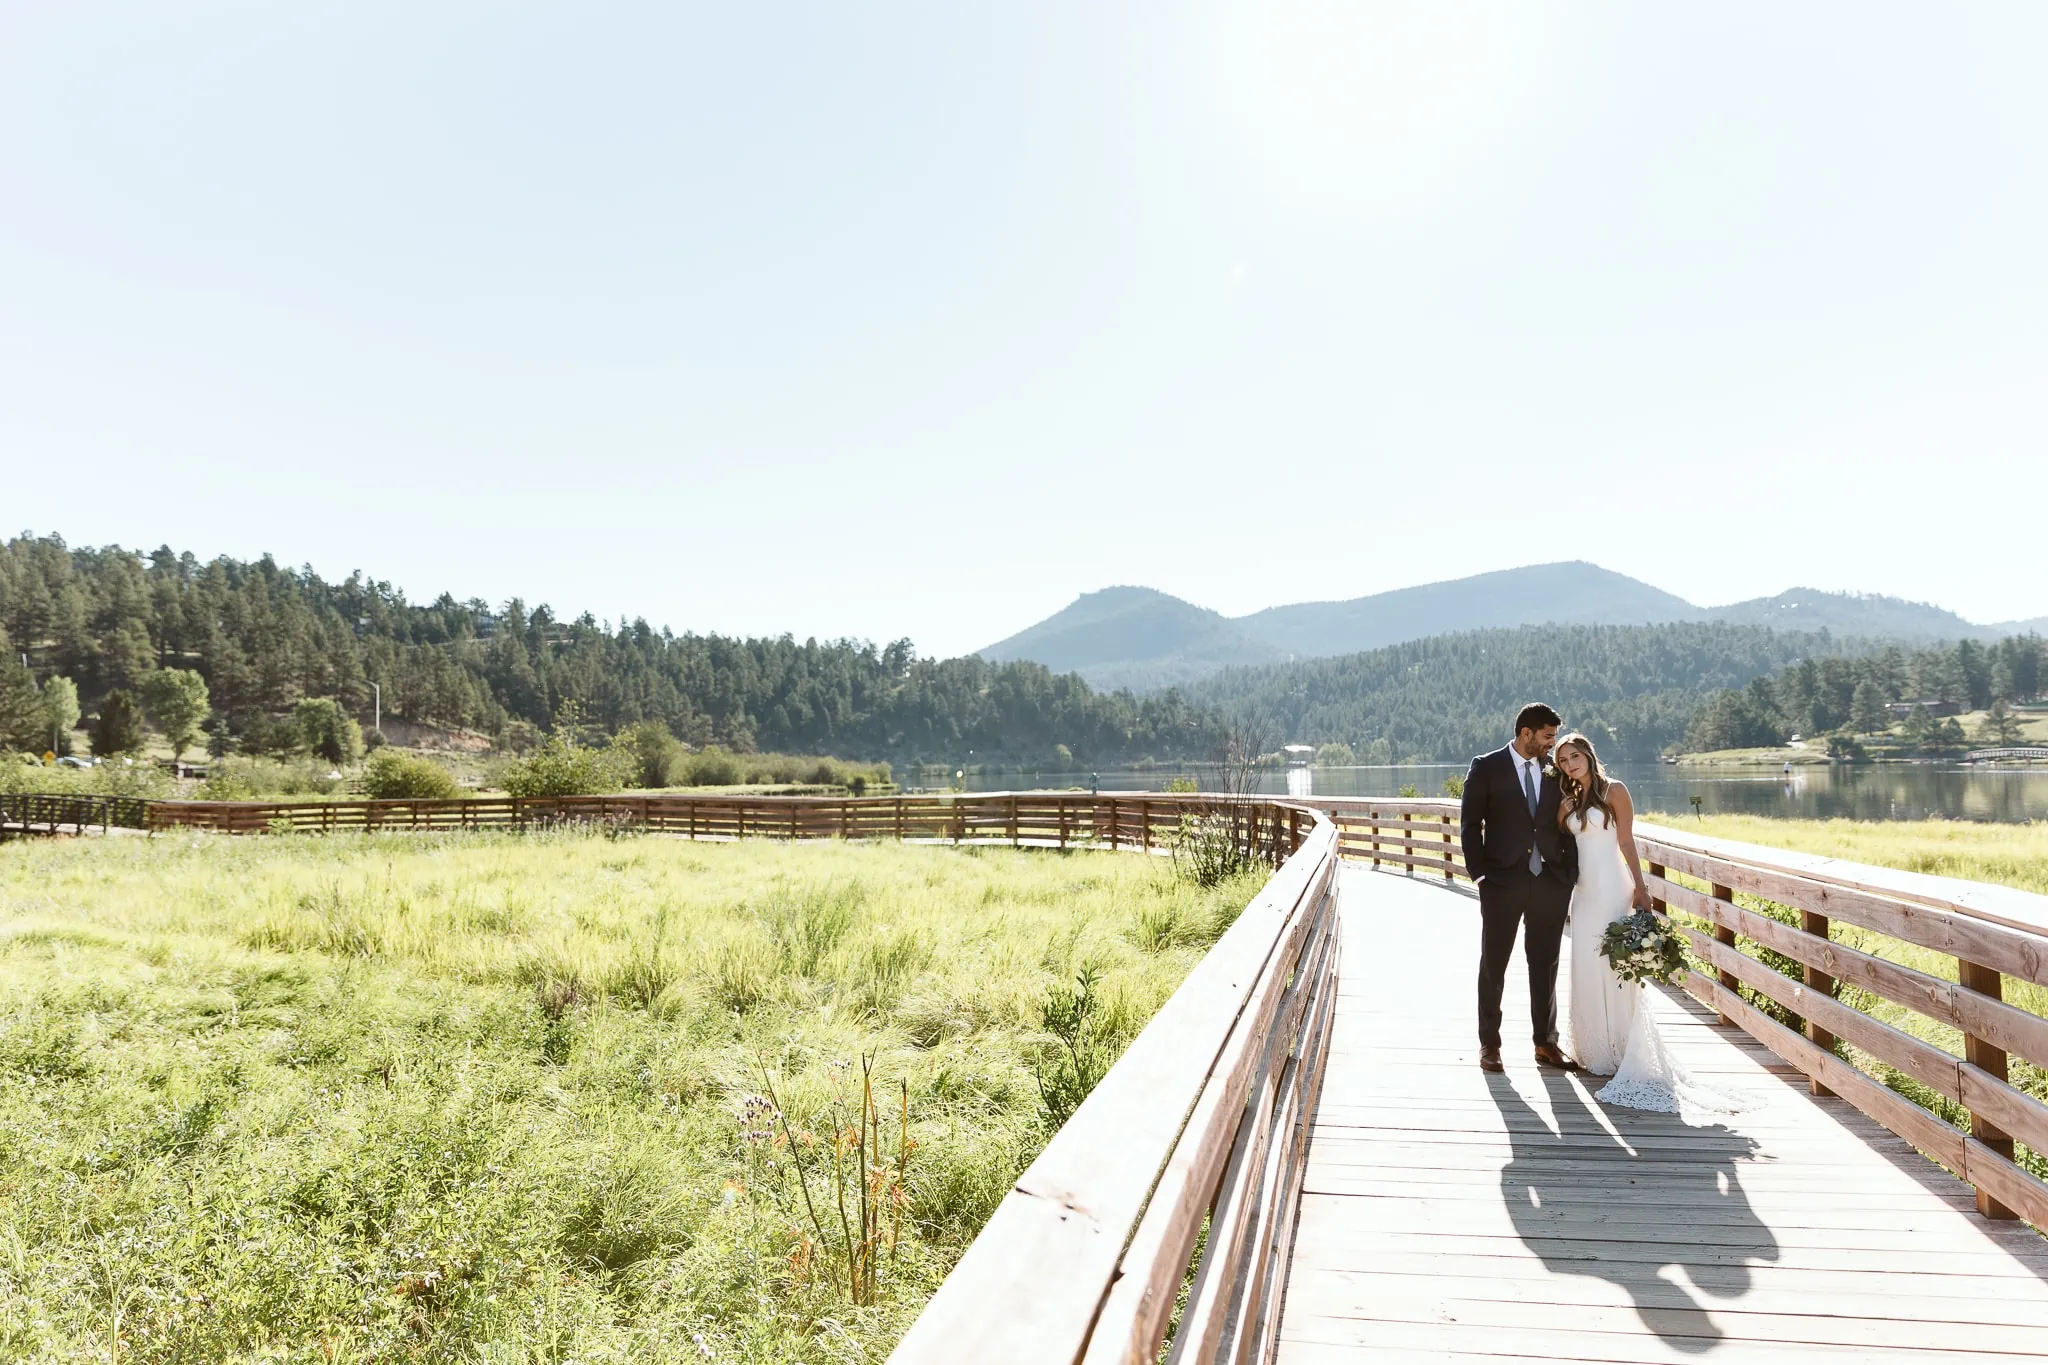 Evergreen Lake House wedding photos on the wooden walkways